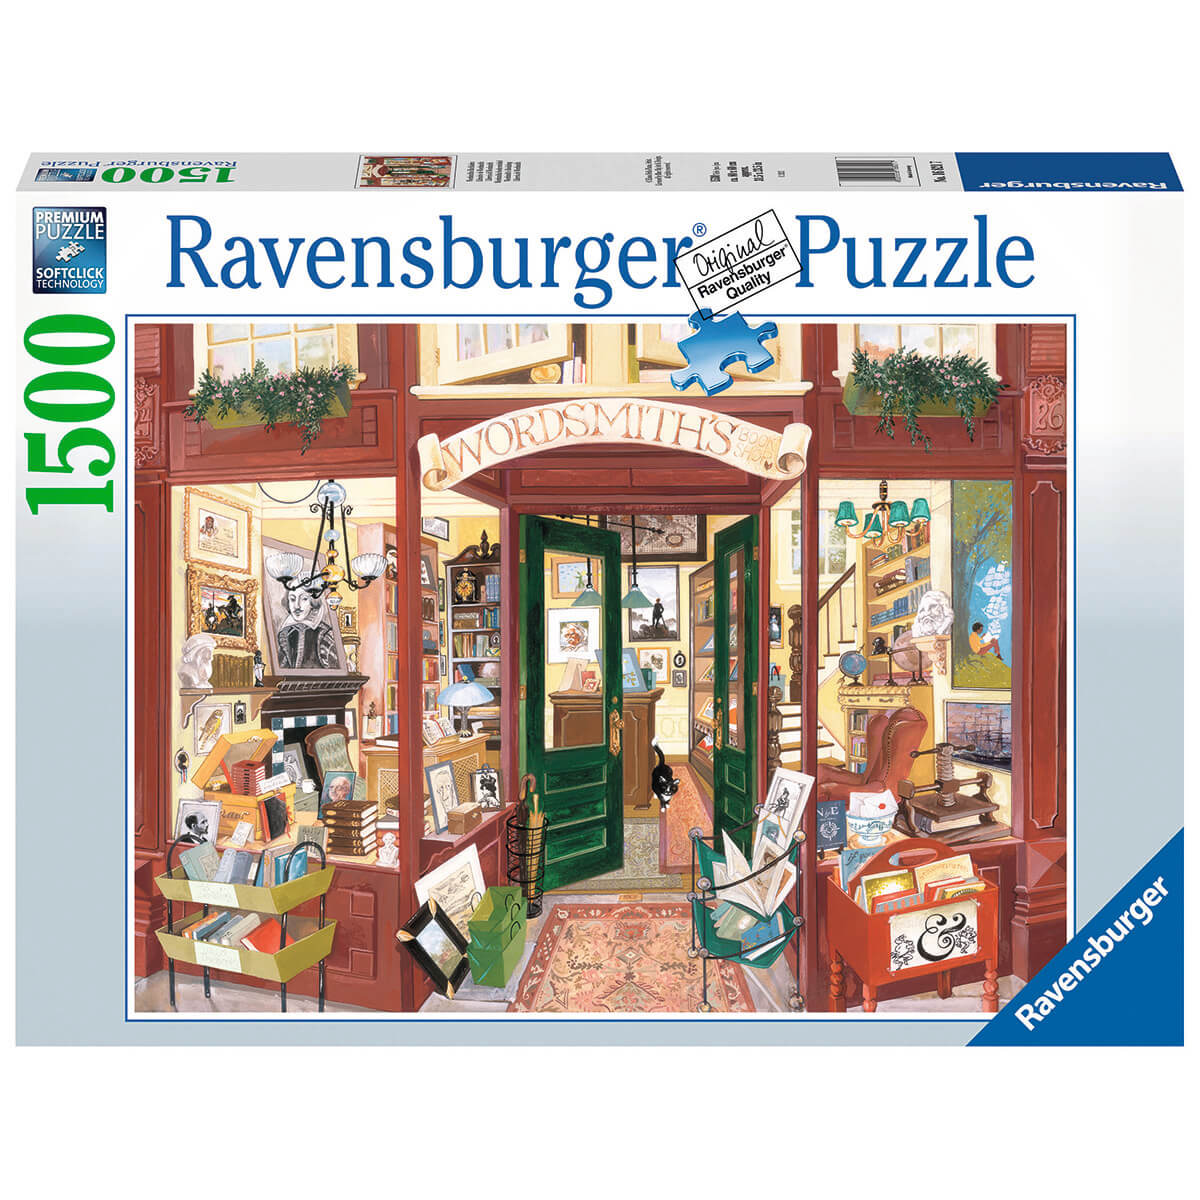 Ravensburger Wordsmith's Bookshop 1500 Piece Puzzle